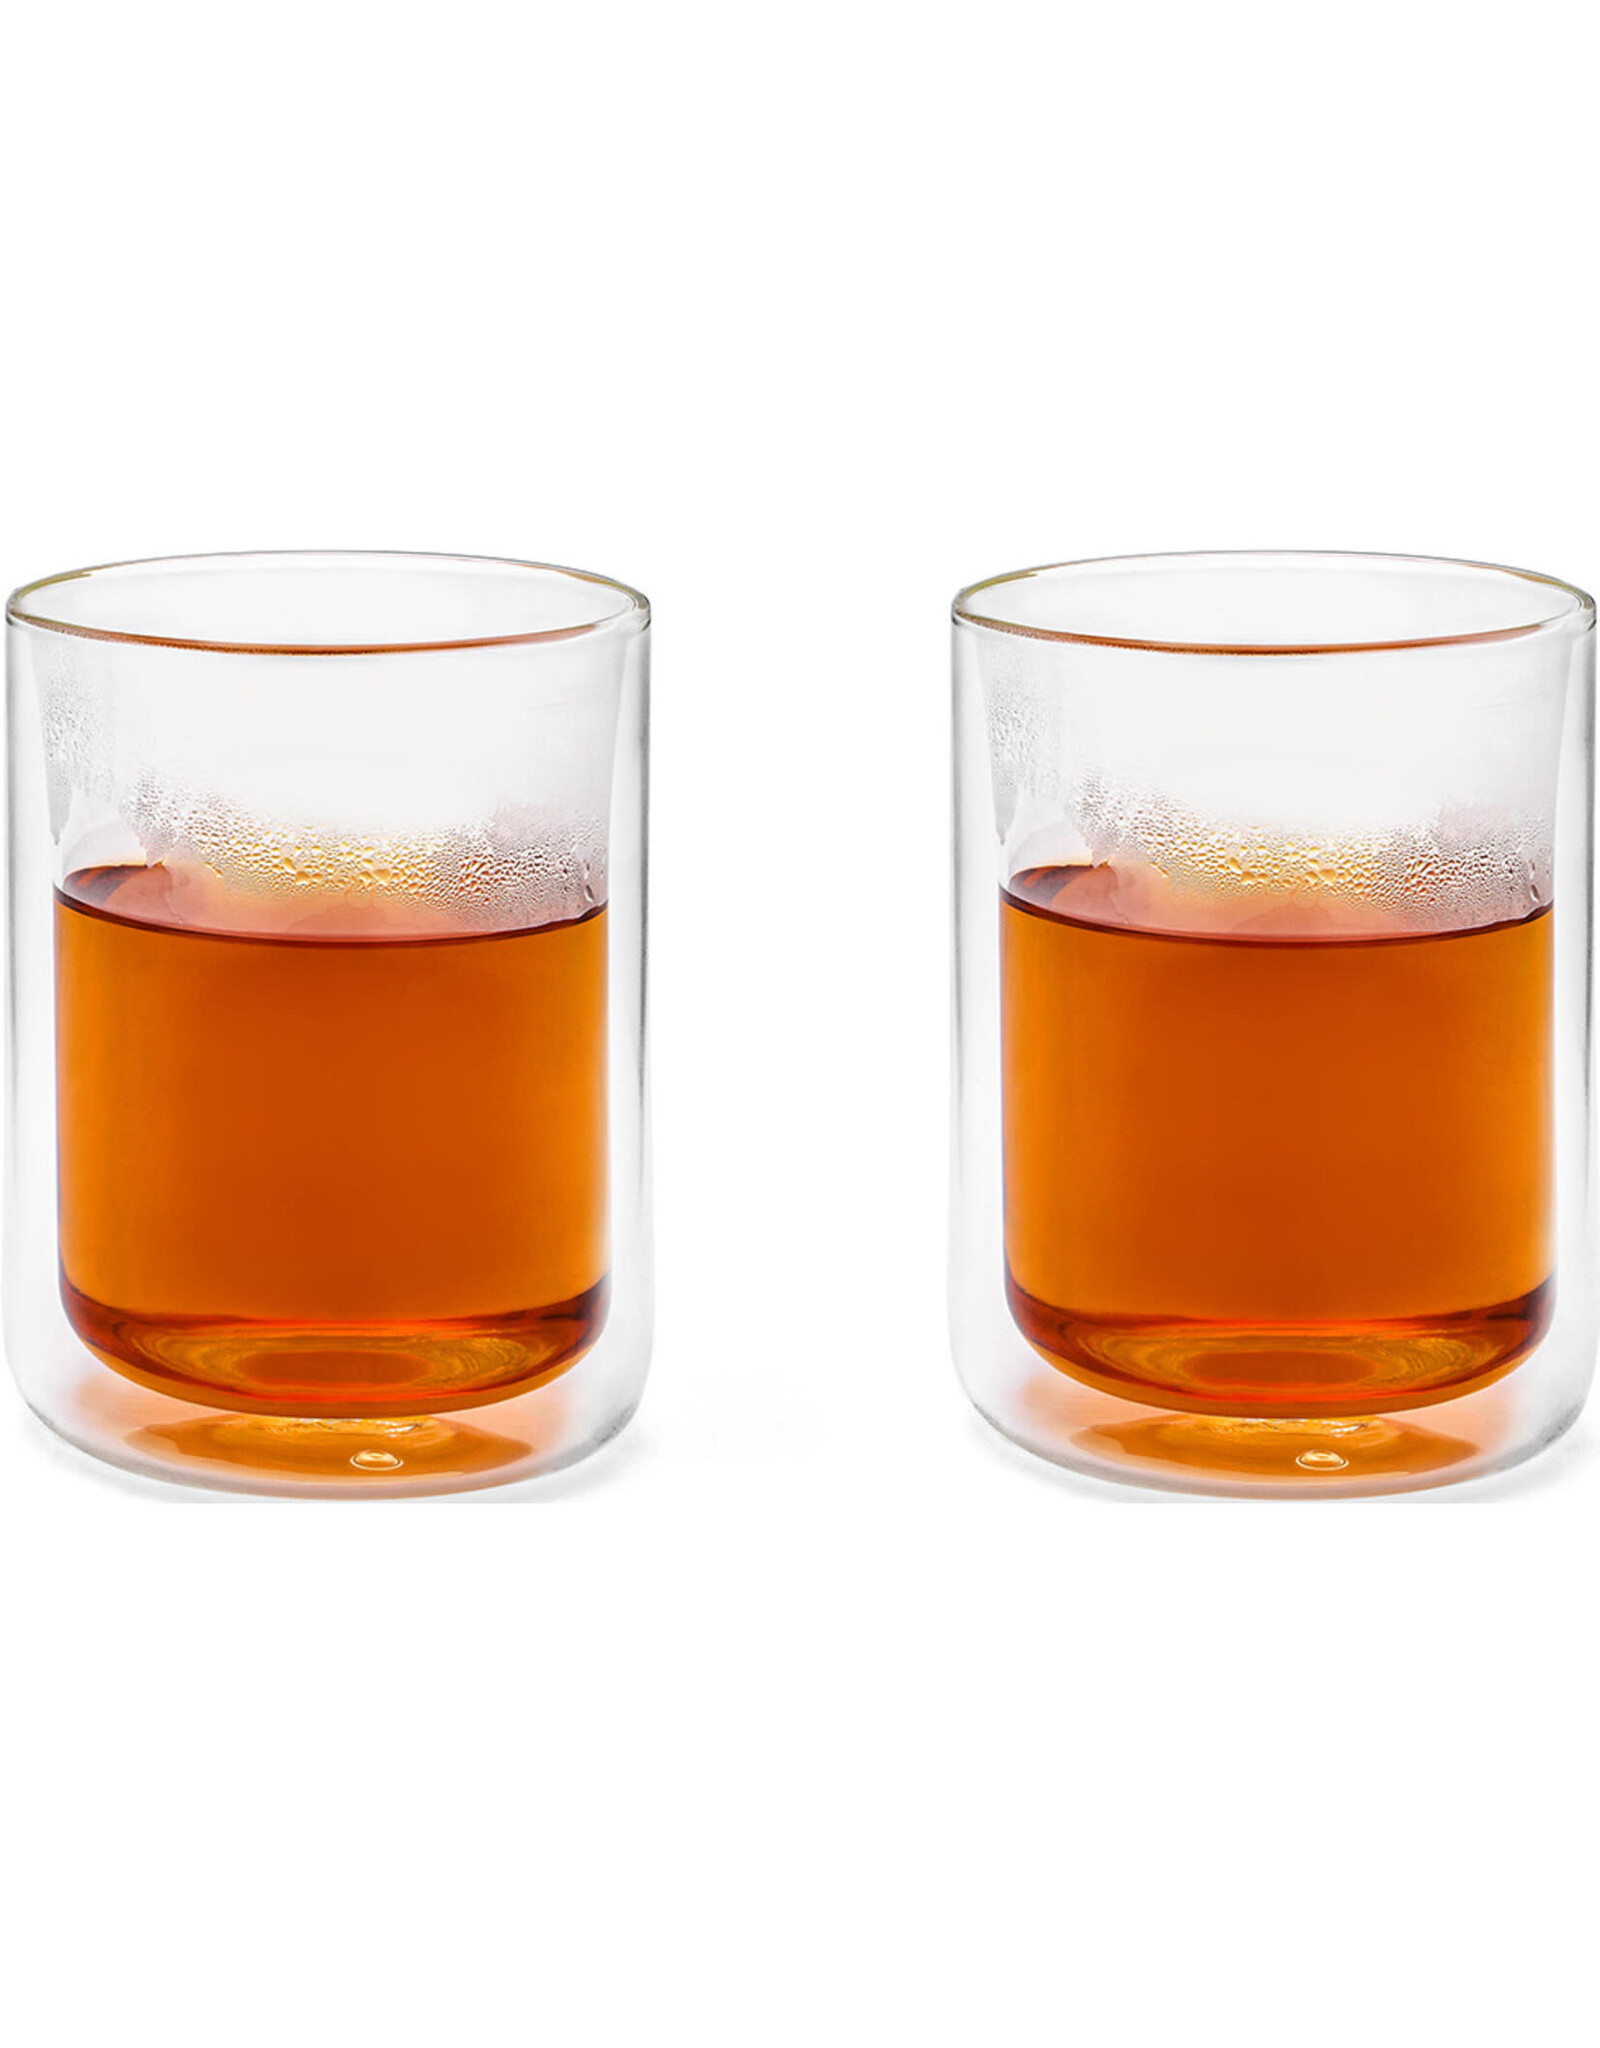 bredemeijer Bredemeijer Dubbelwandig glas San Remo 290 ml, 2 stuks